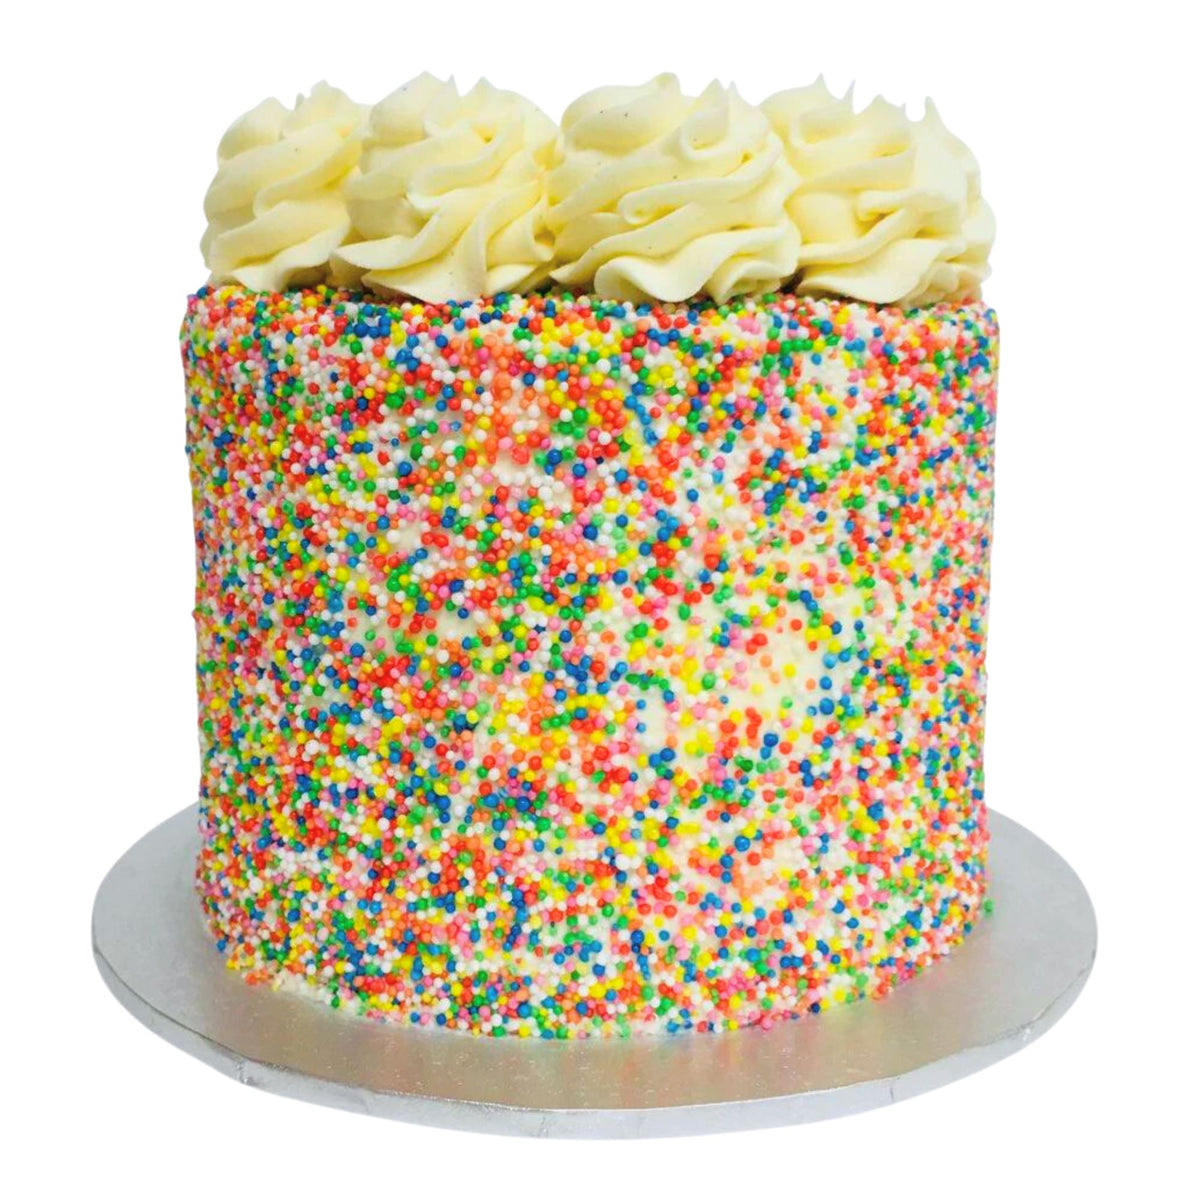 Rainbow Cake Cakes The Cupcake Queens 